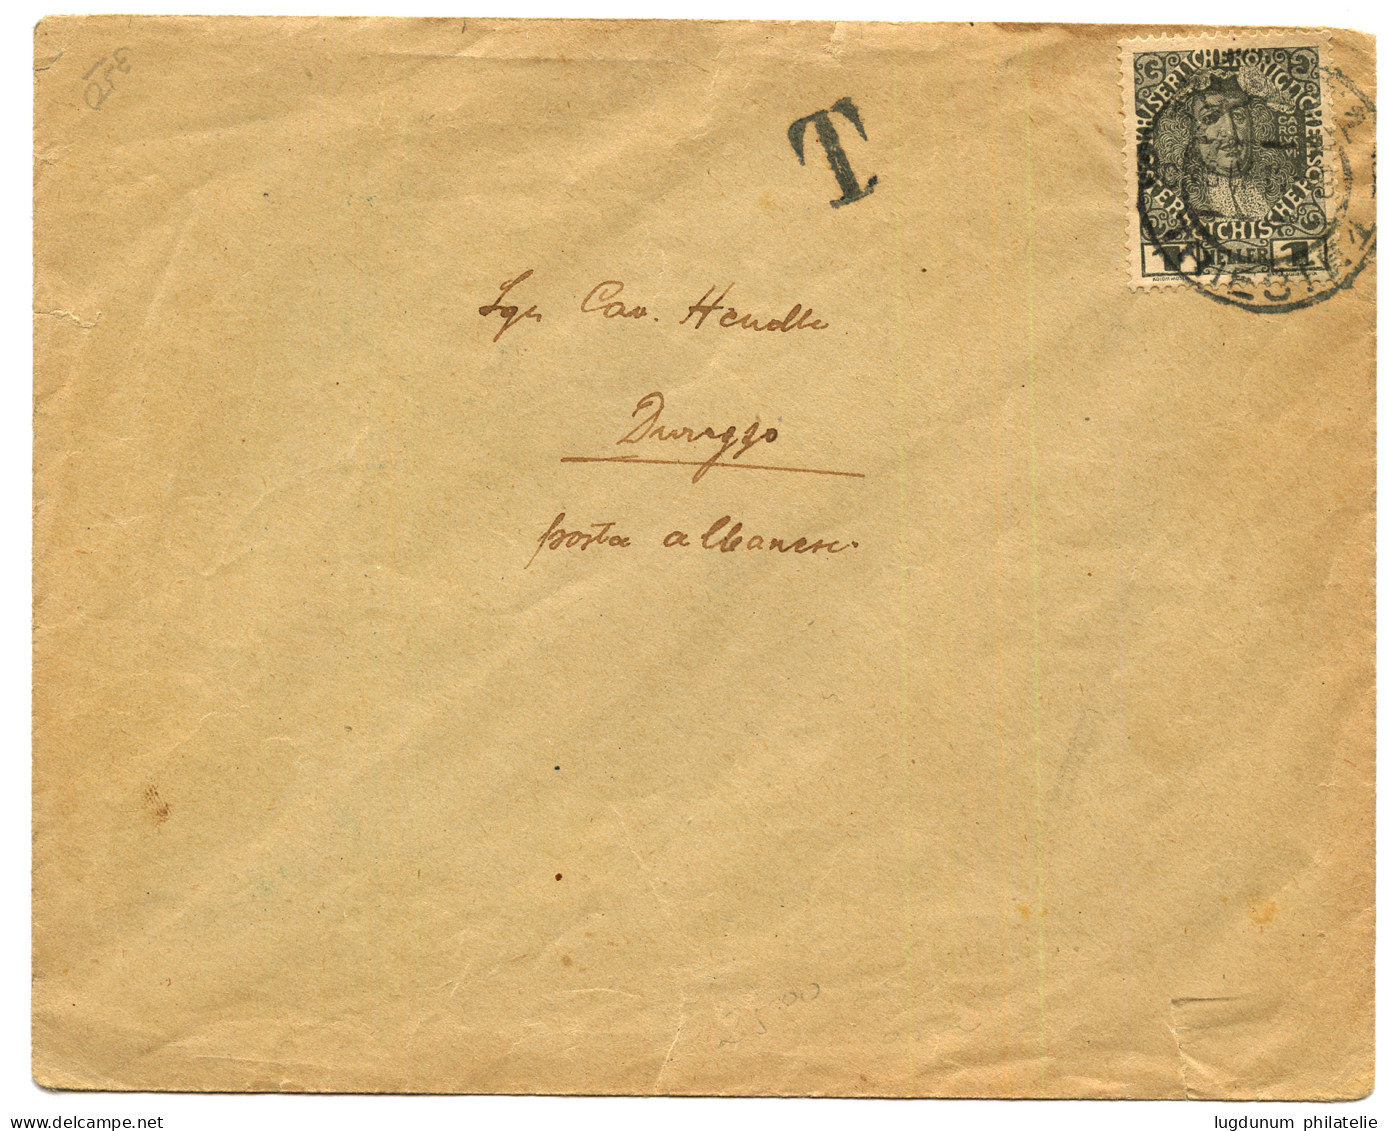 ALBANIA : 1914 AUSTRIA 1h Canc. TRIESTE + "T" Tax Marking On Envelope (PRINTED MATTER Rate) On Envelope To DURAZZO Taxed - Albania